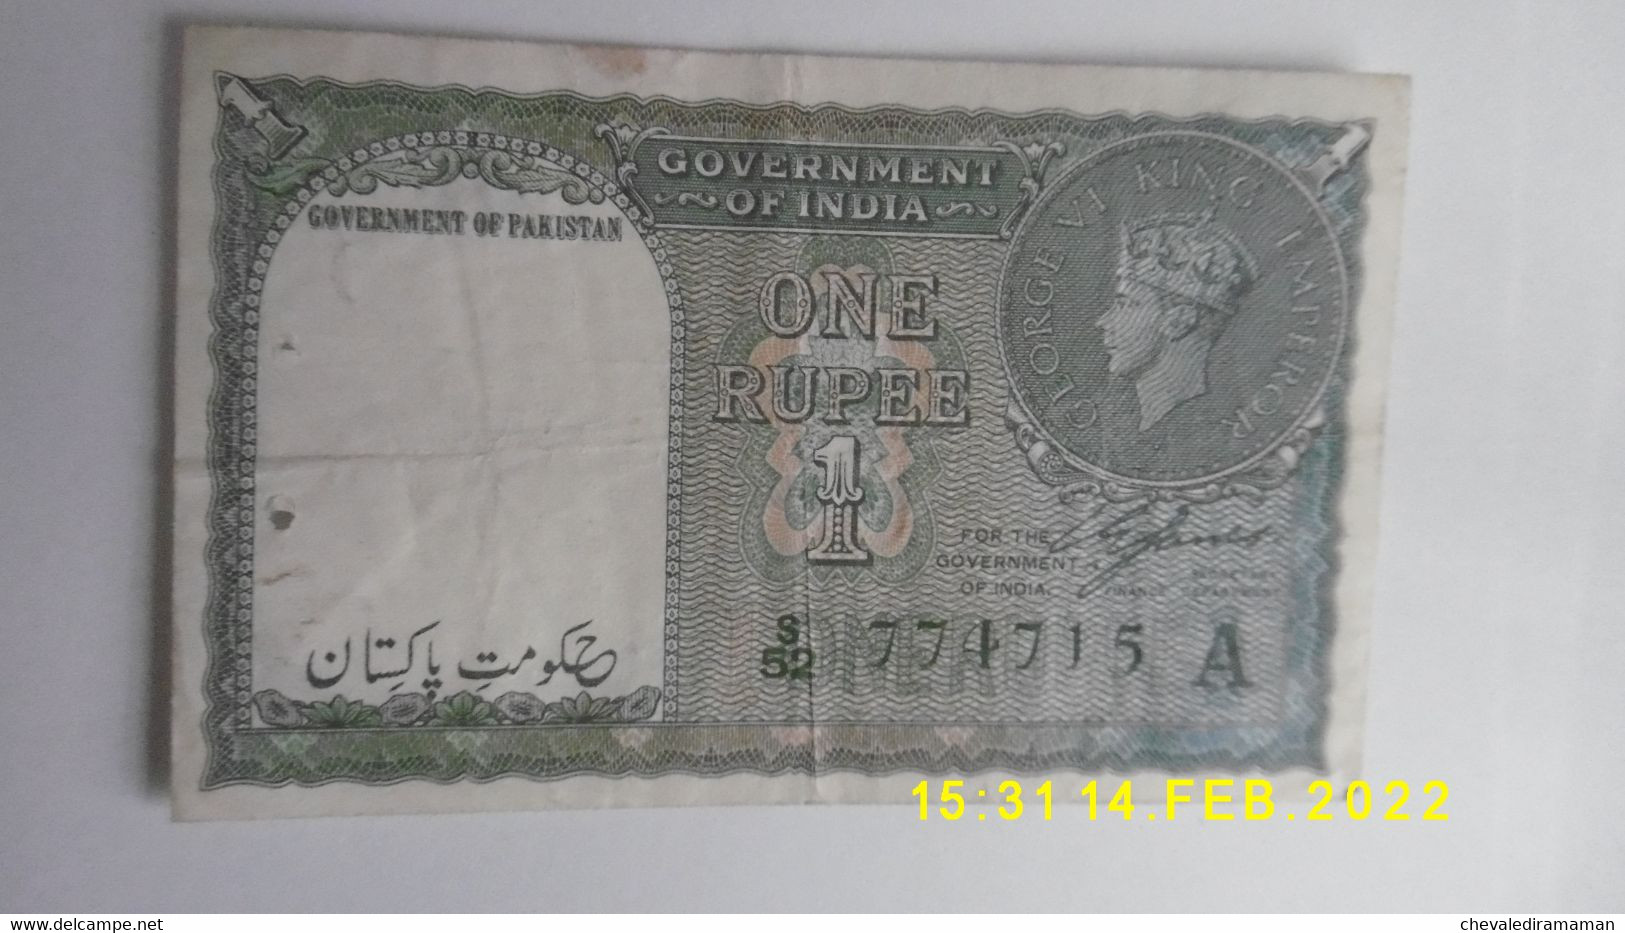 Billet Banque Inde 1 Rupie - Roi George VI - 1938 Probablement - India